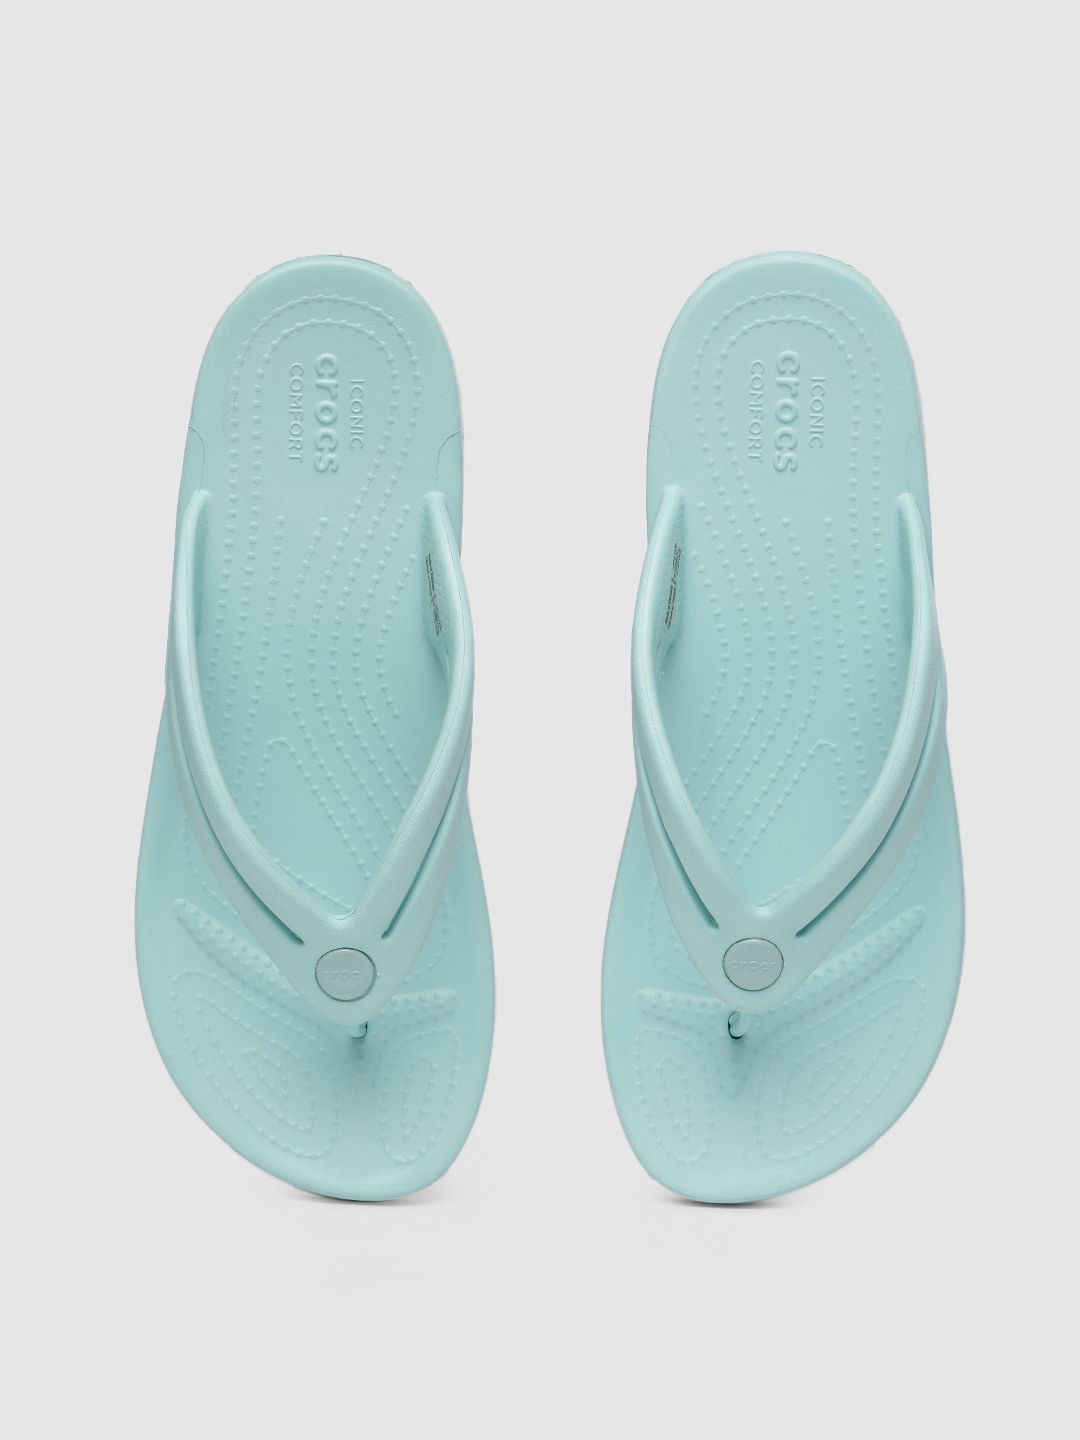 Crocs Women Blue Croslite Thong Flip-Flops Price in India